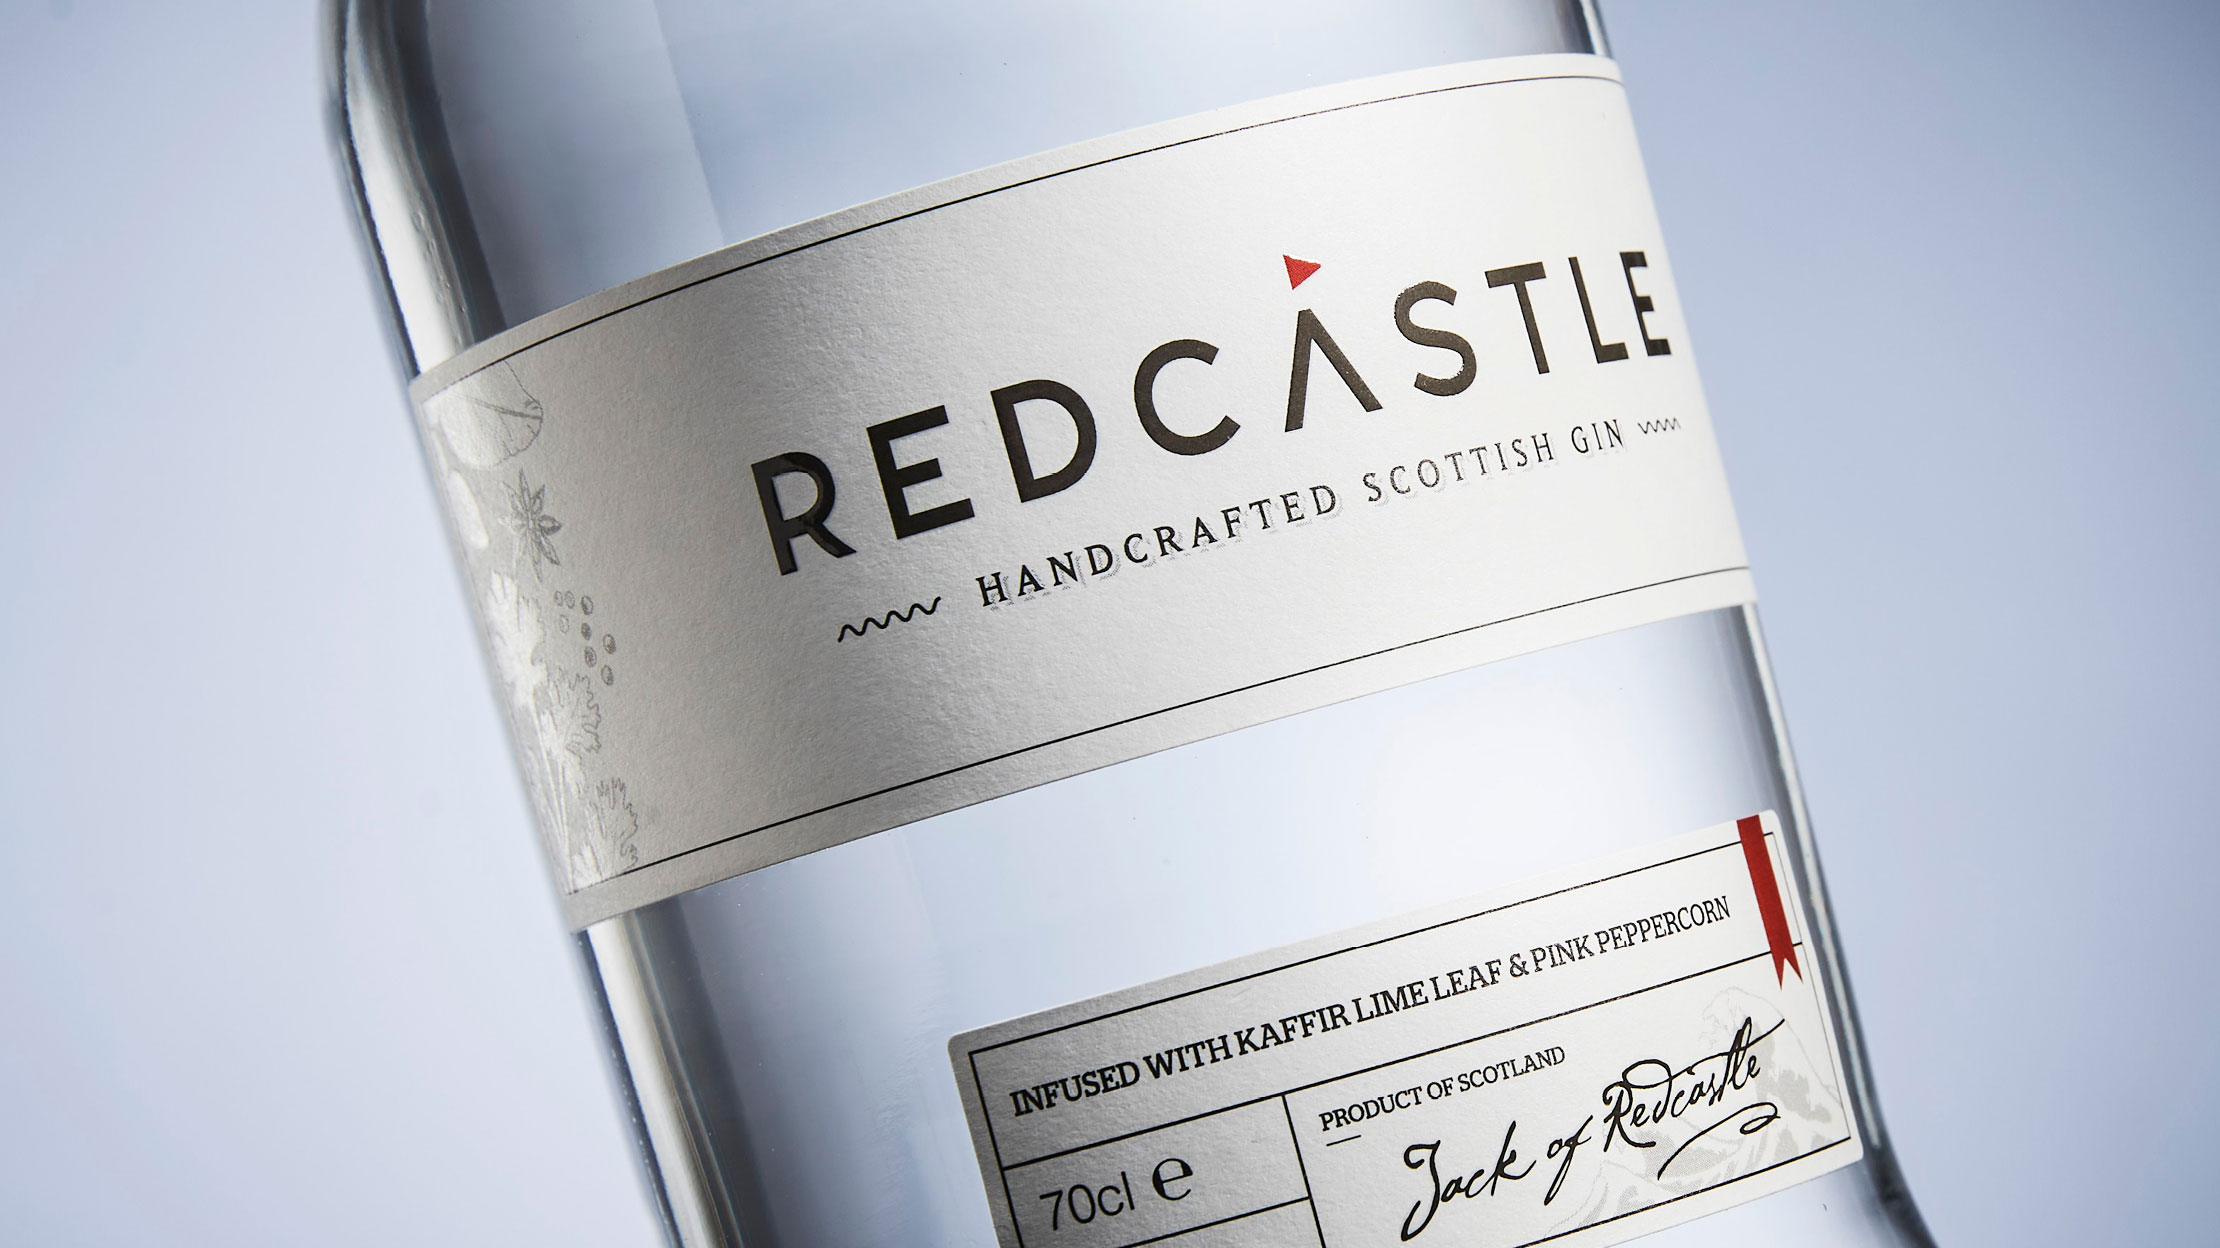 "Redcastle" gin packaging design.